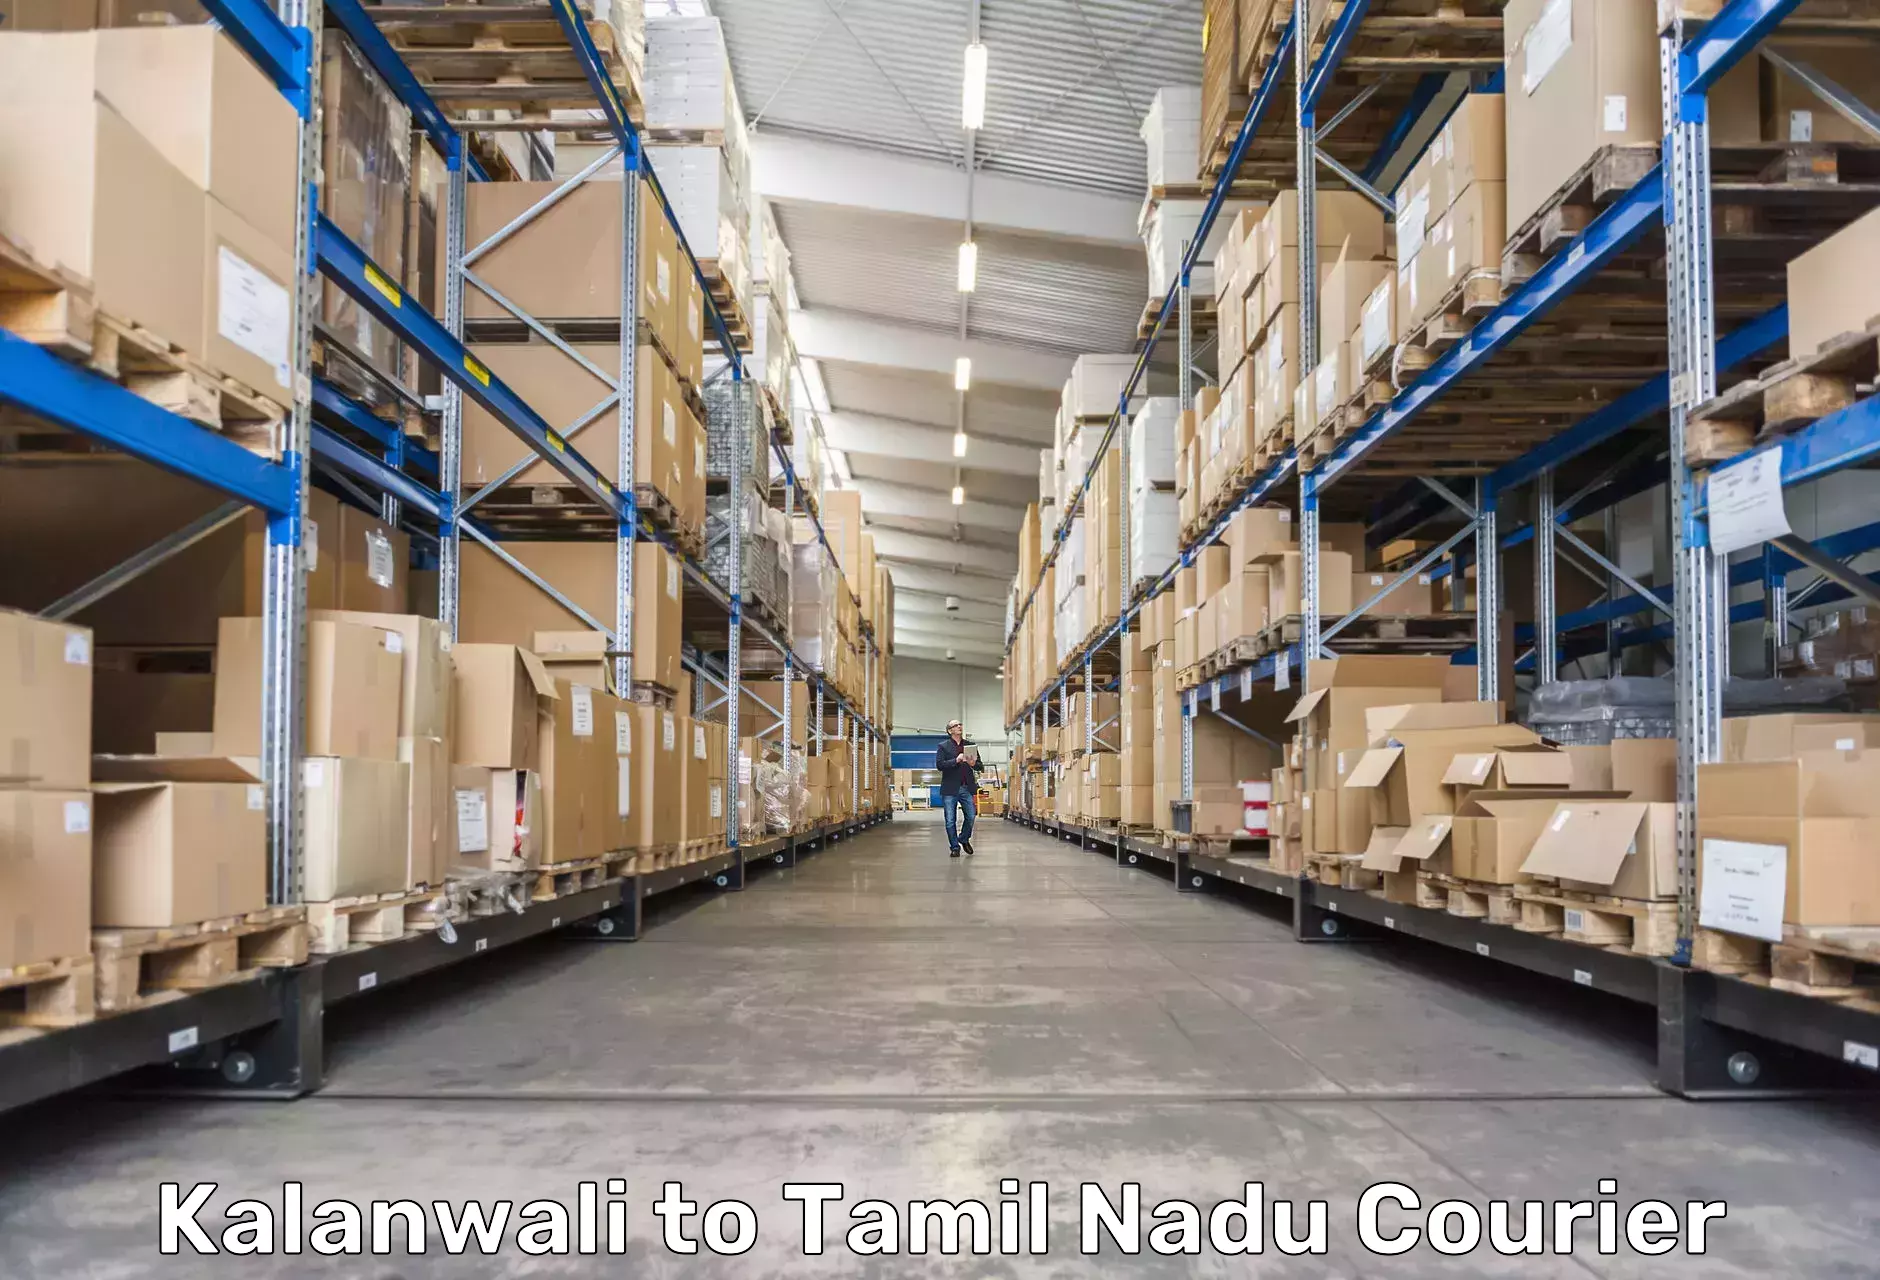 Courier service partnerships Kalanwali to Avadi